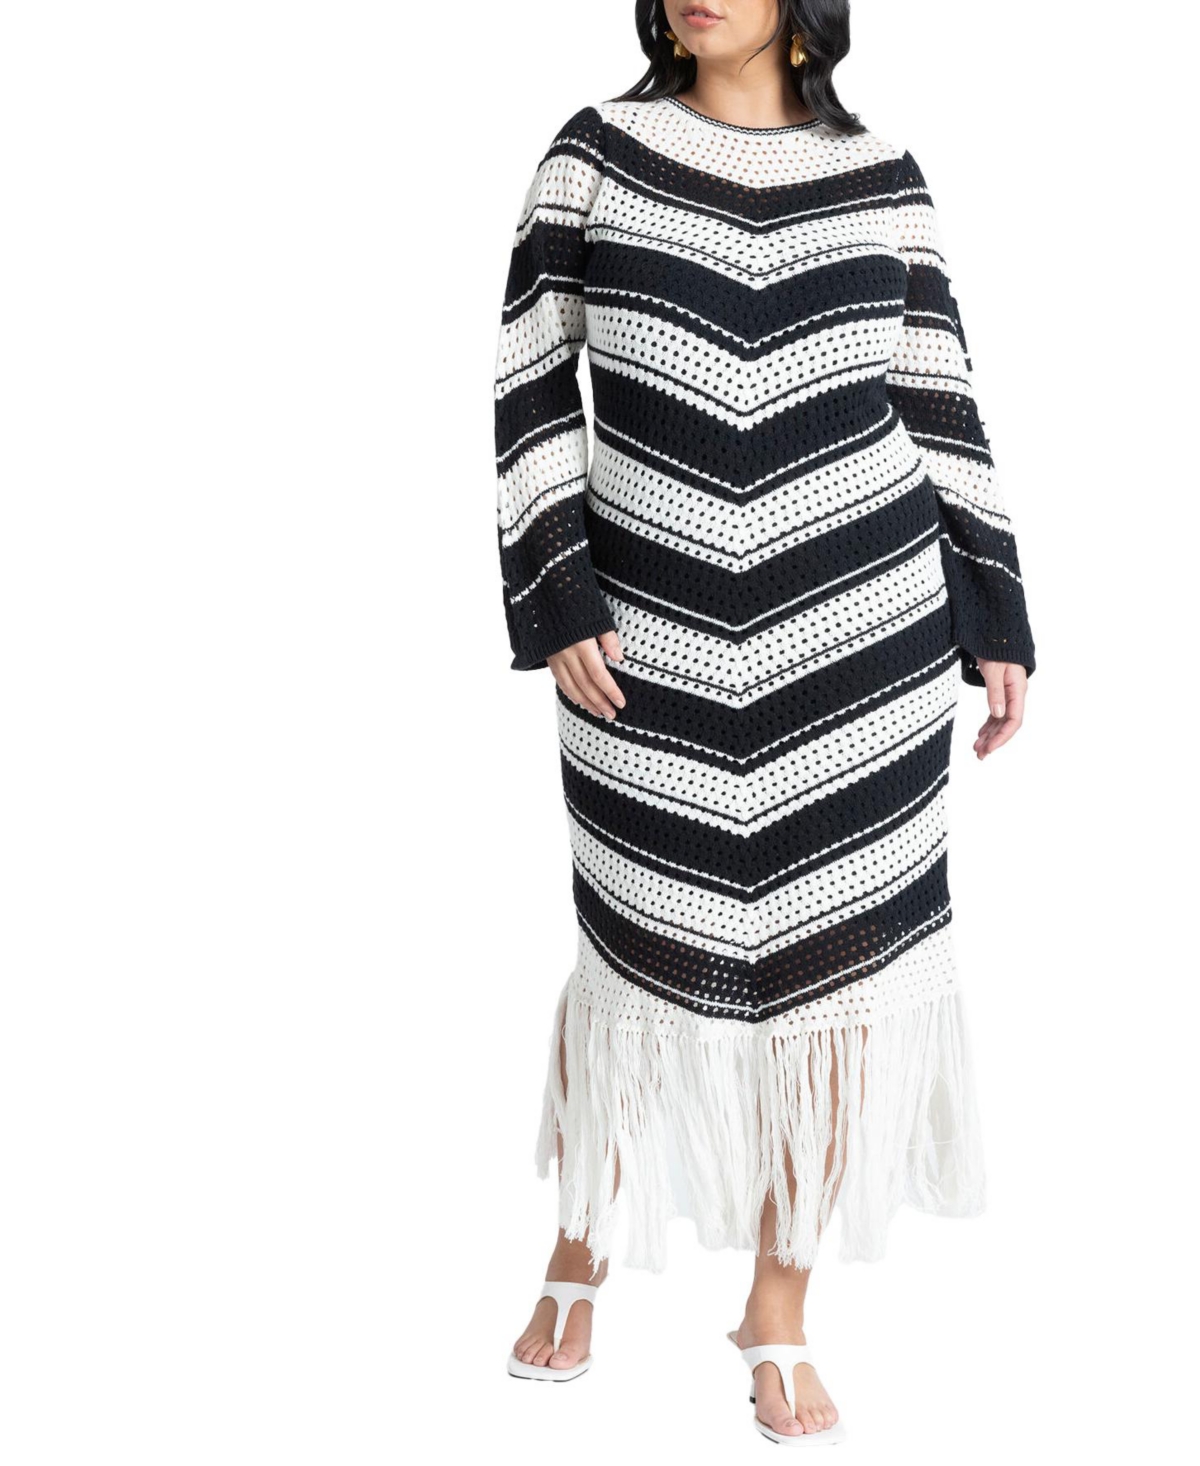 Plus Size Crochet Maxi Dress With Fringe - Charcoal pinstripe